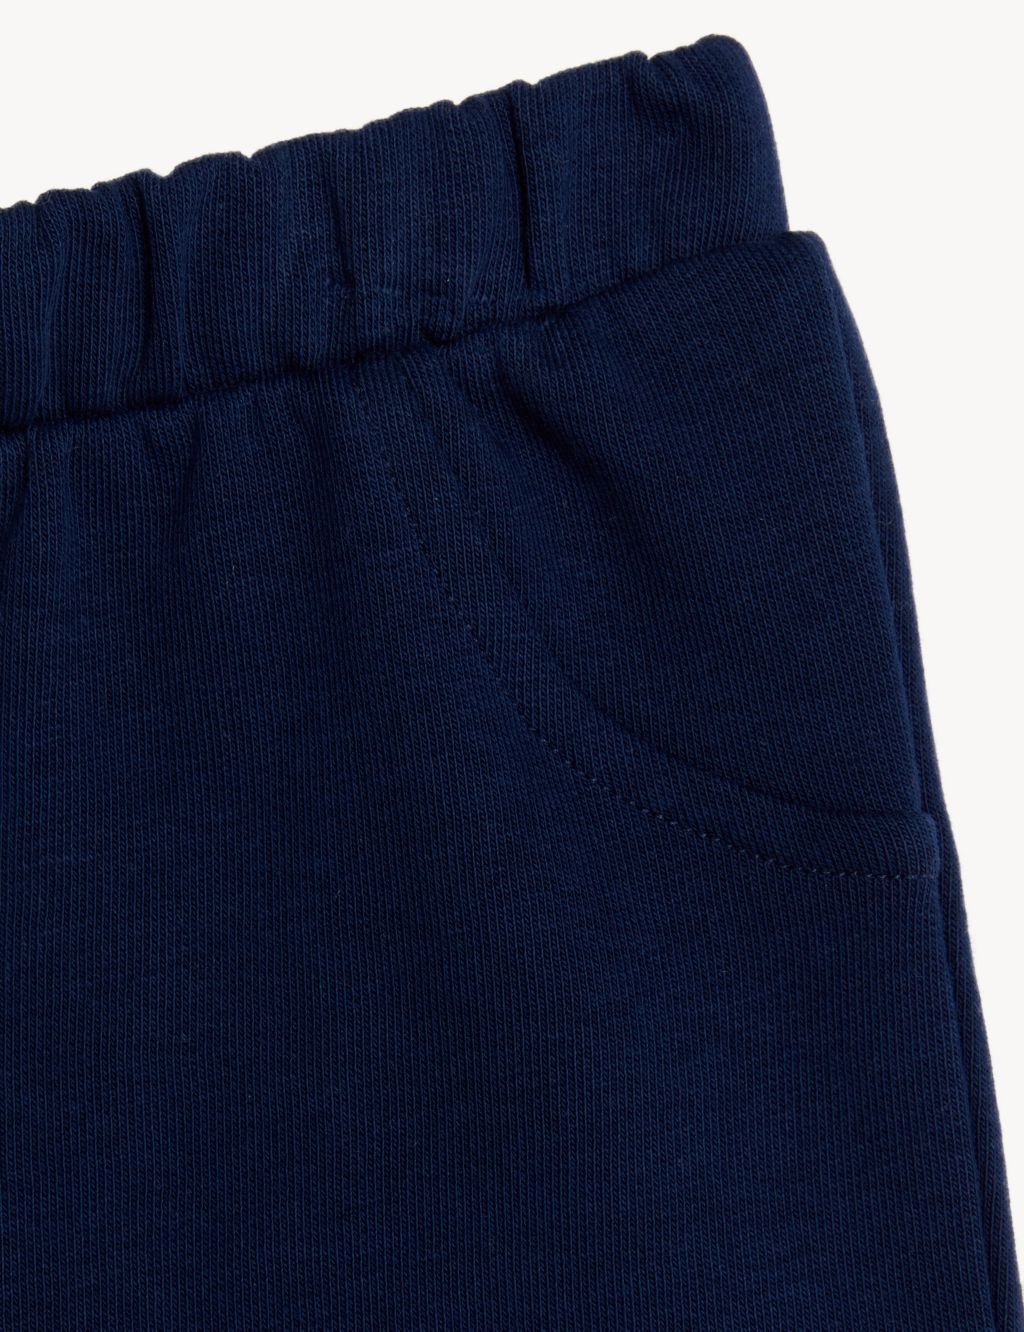 Cotton Rich Shorts (0-3 Yrs) image 3